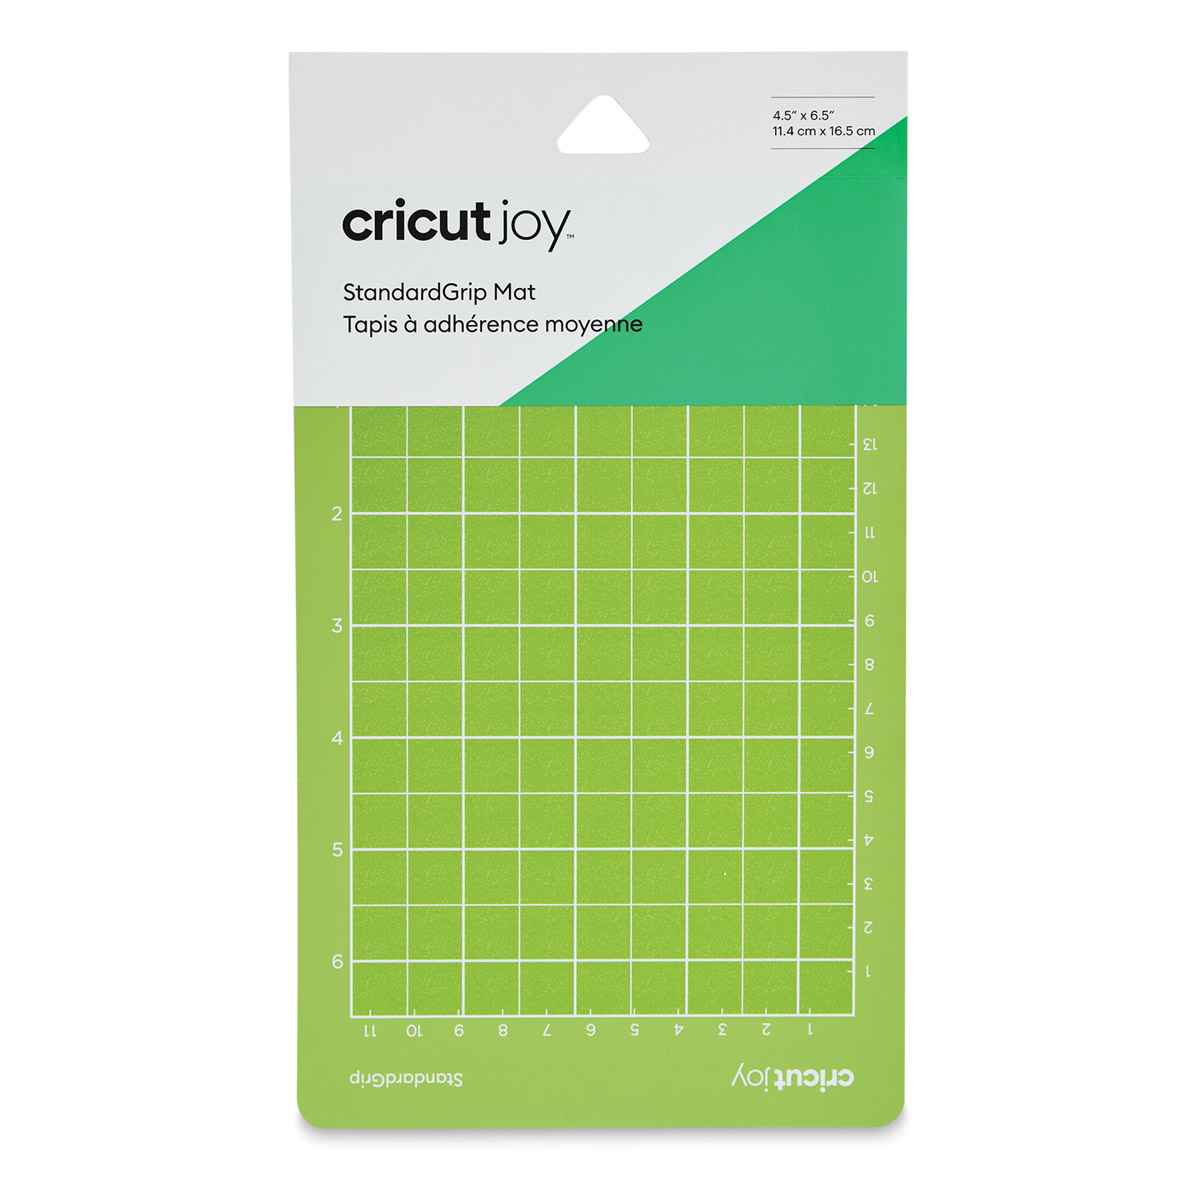 Cutting Mat For Cricut Joy Standardgrip Lightgrip And - Temu